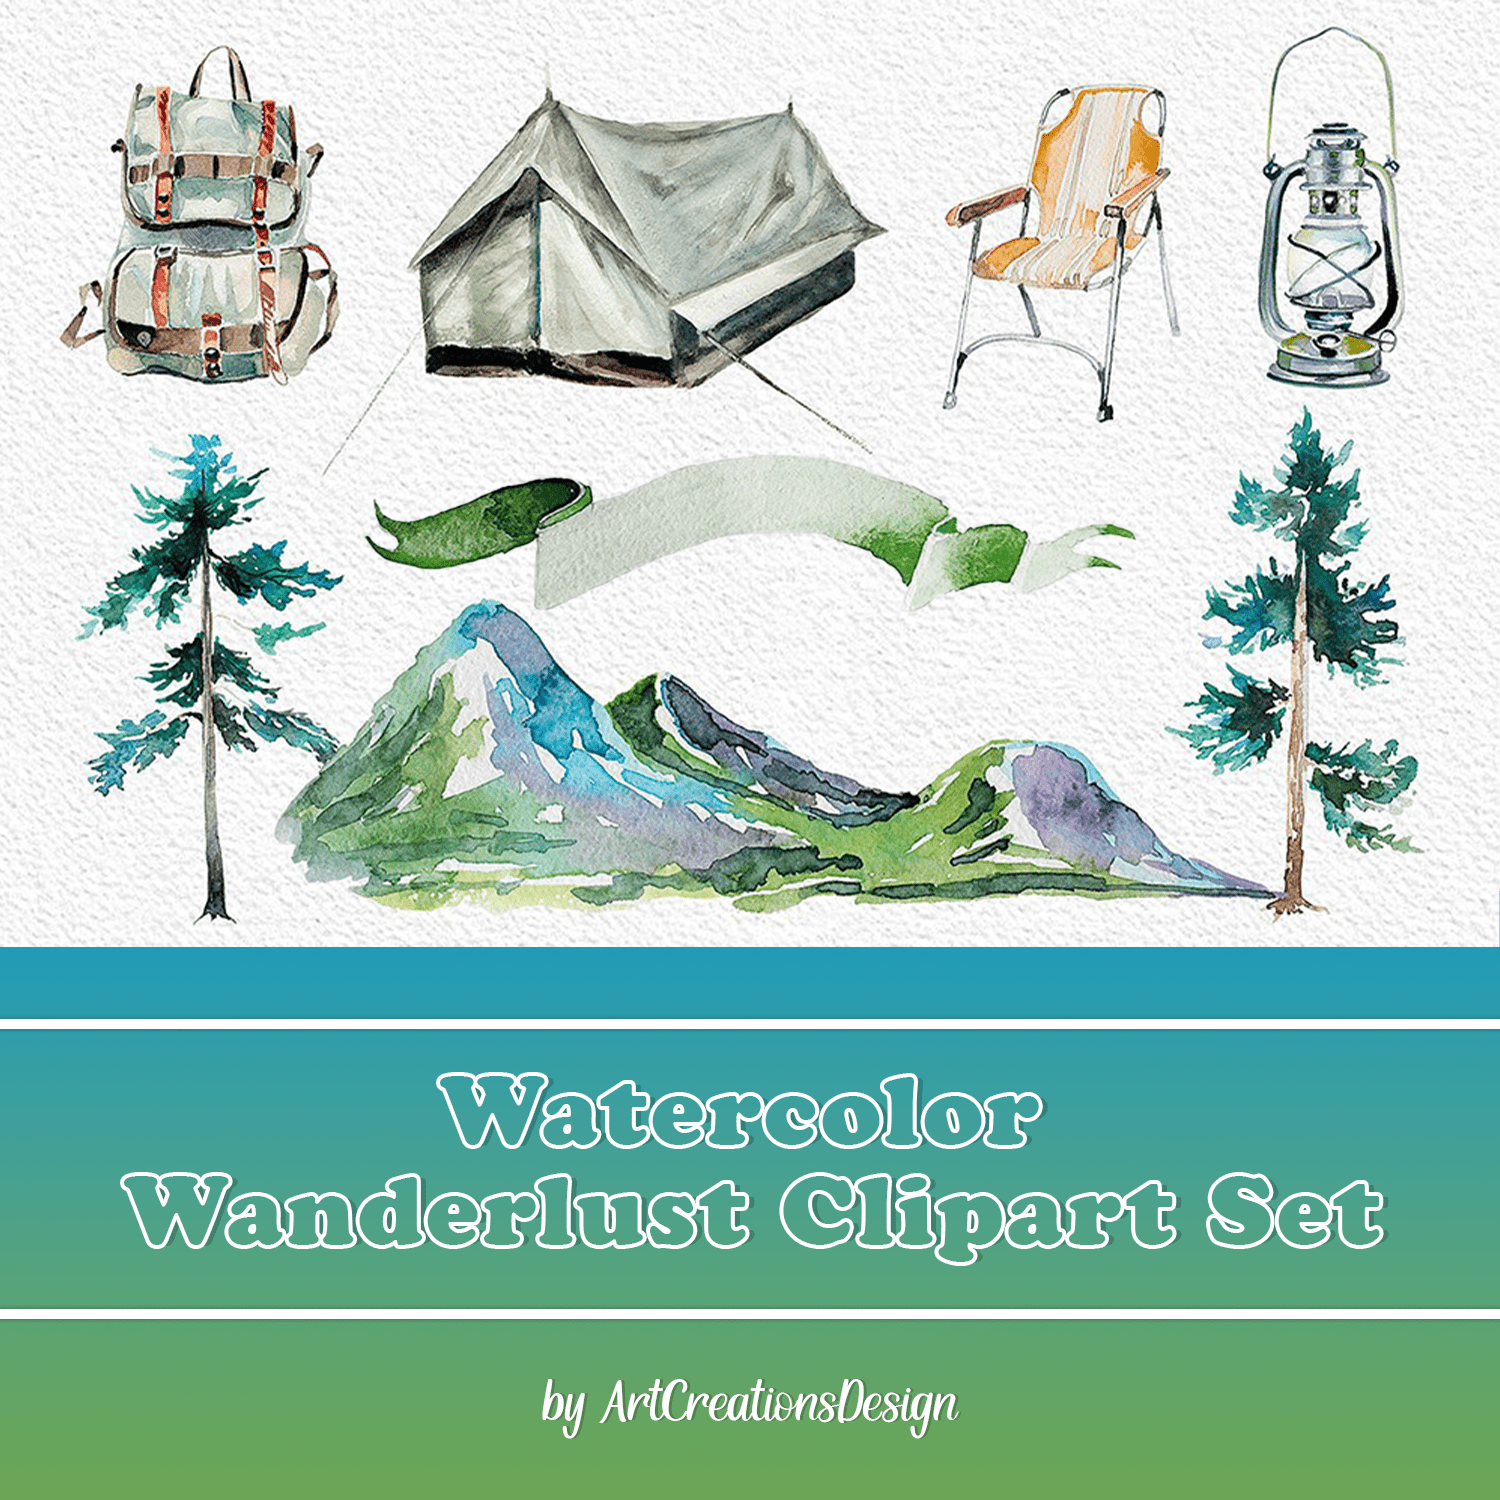 Watercolor Wanderlust Clipart Set created by ArtCreationsDesign.